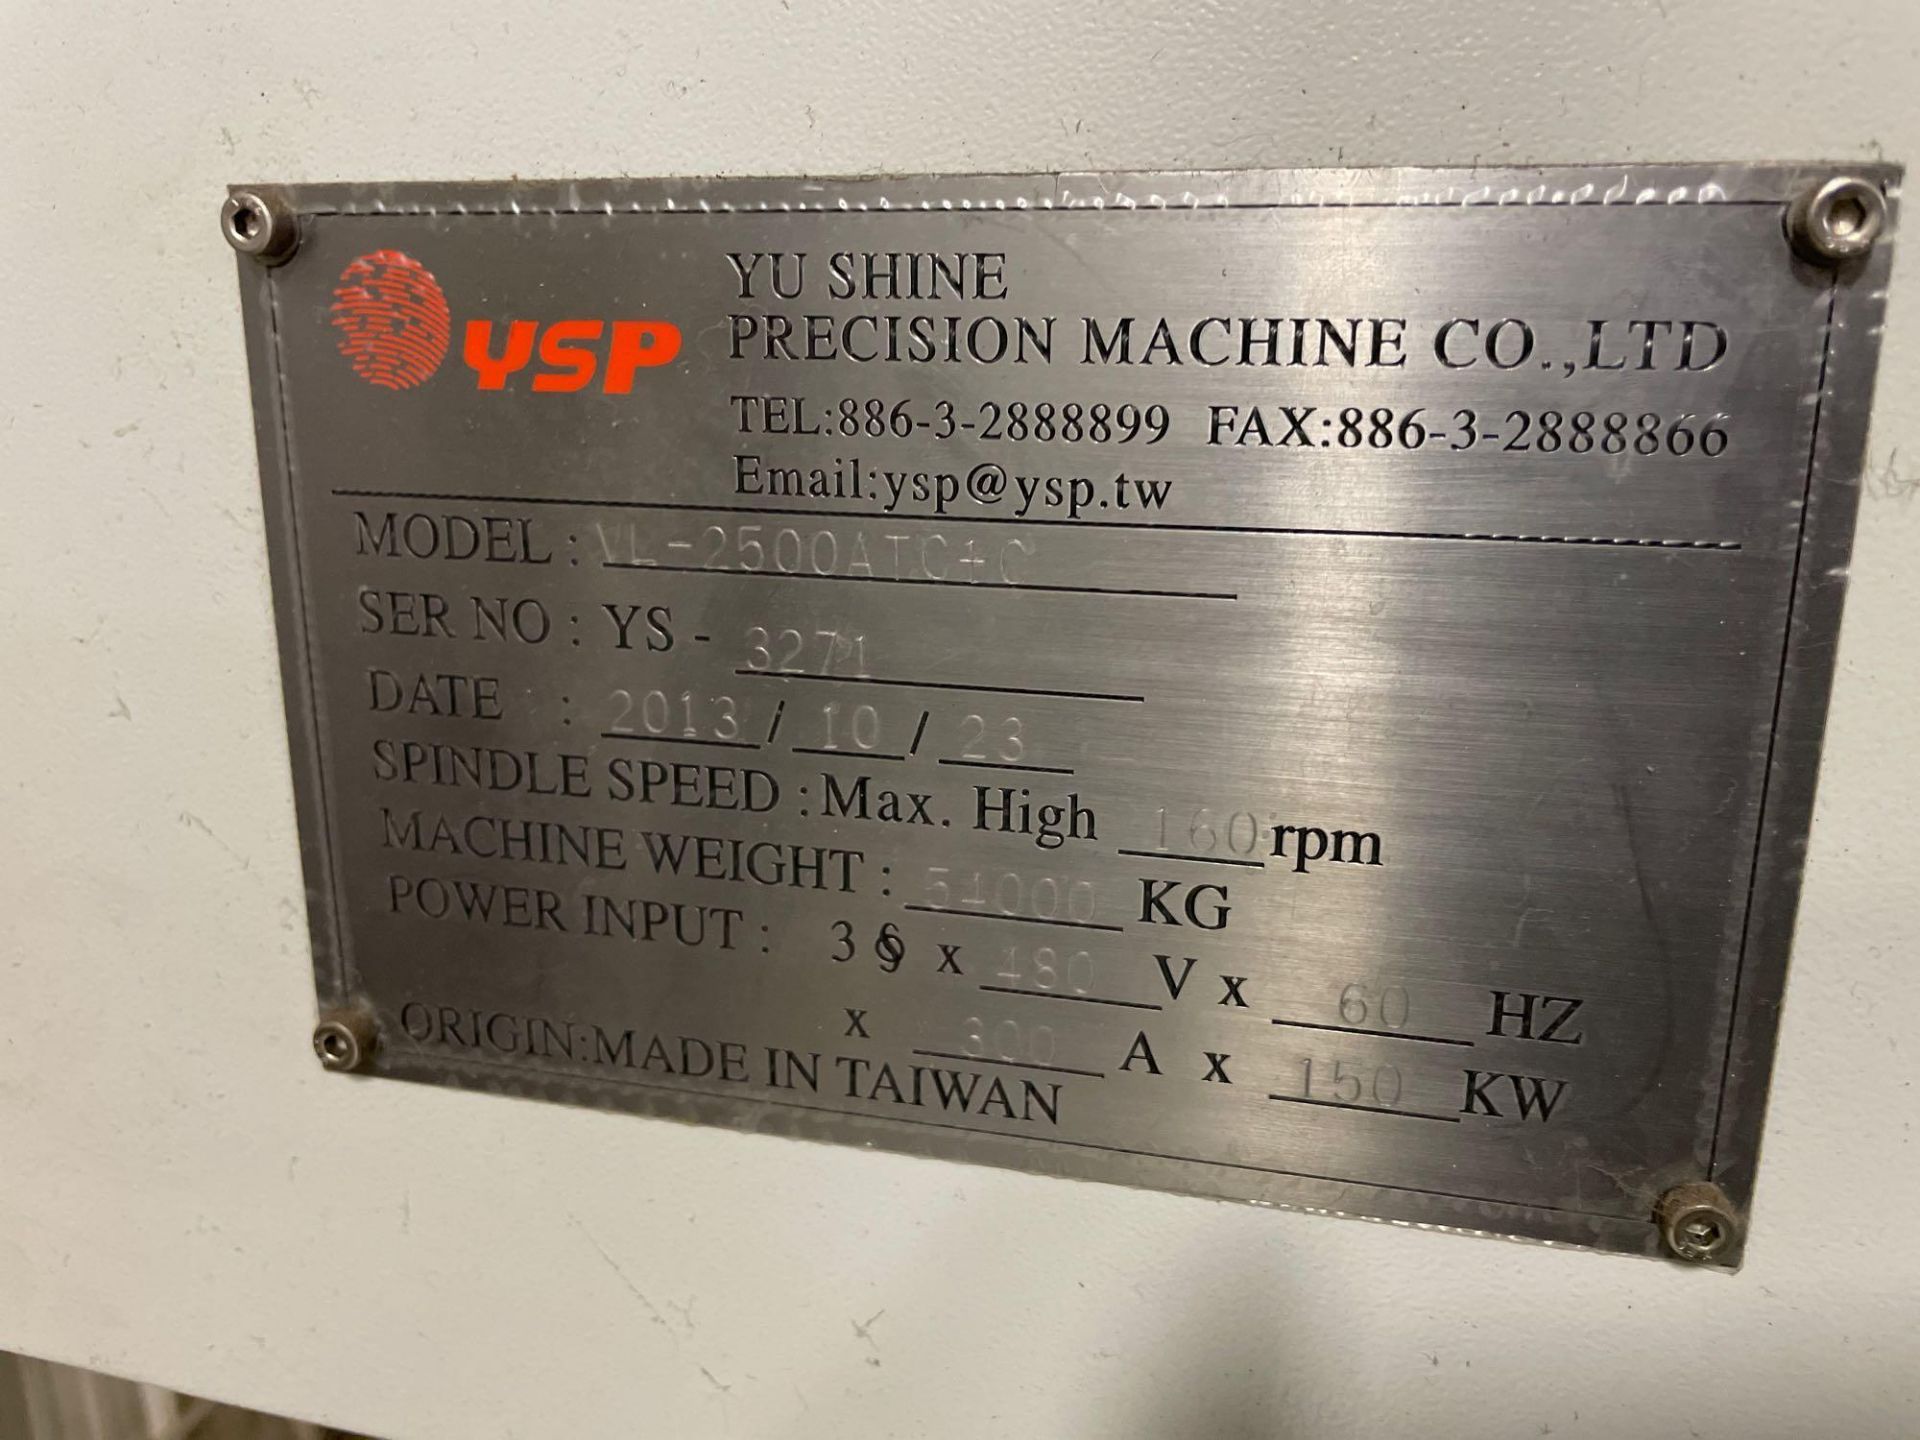 98.5" YSP/Yu Shine VL-2500ATC+C CNC Vertical Turning Boring Mill, New 2013 - Image 13 of 15